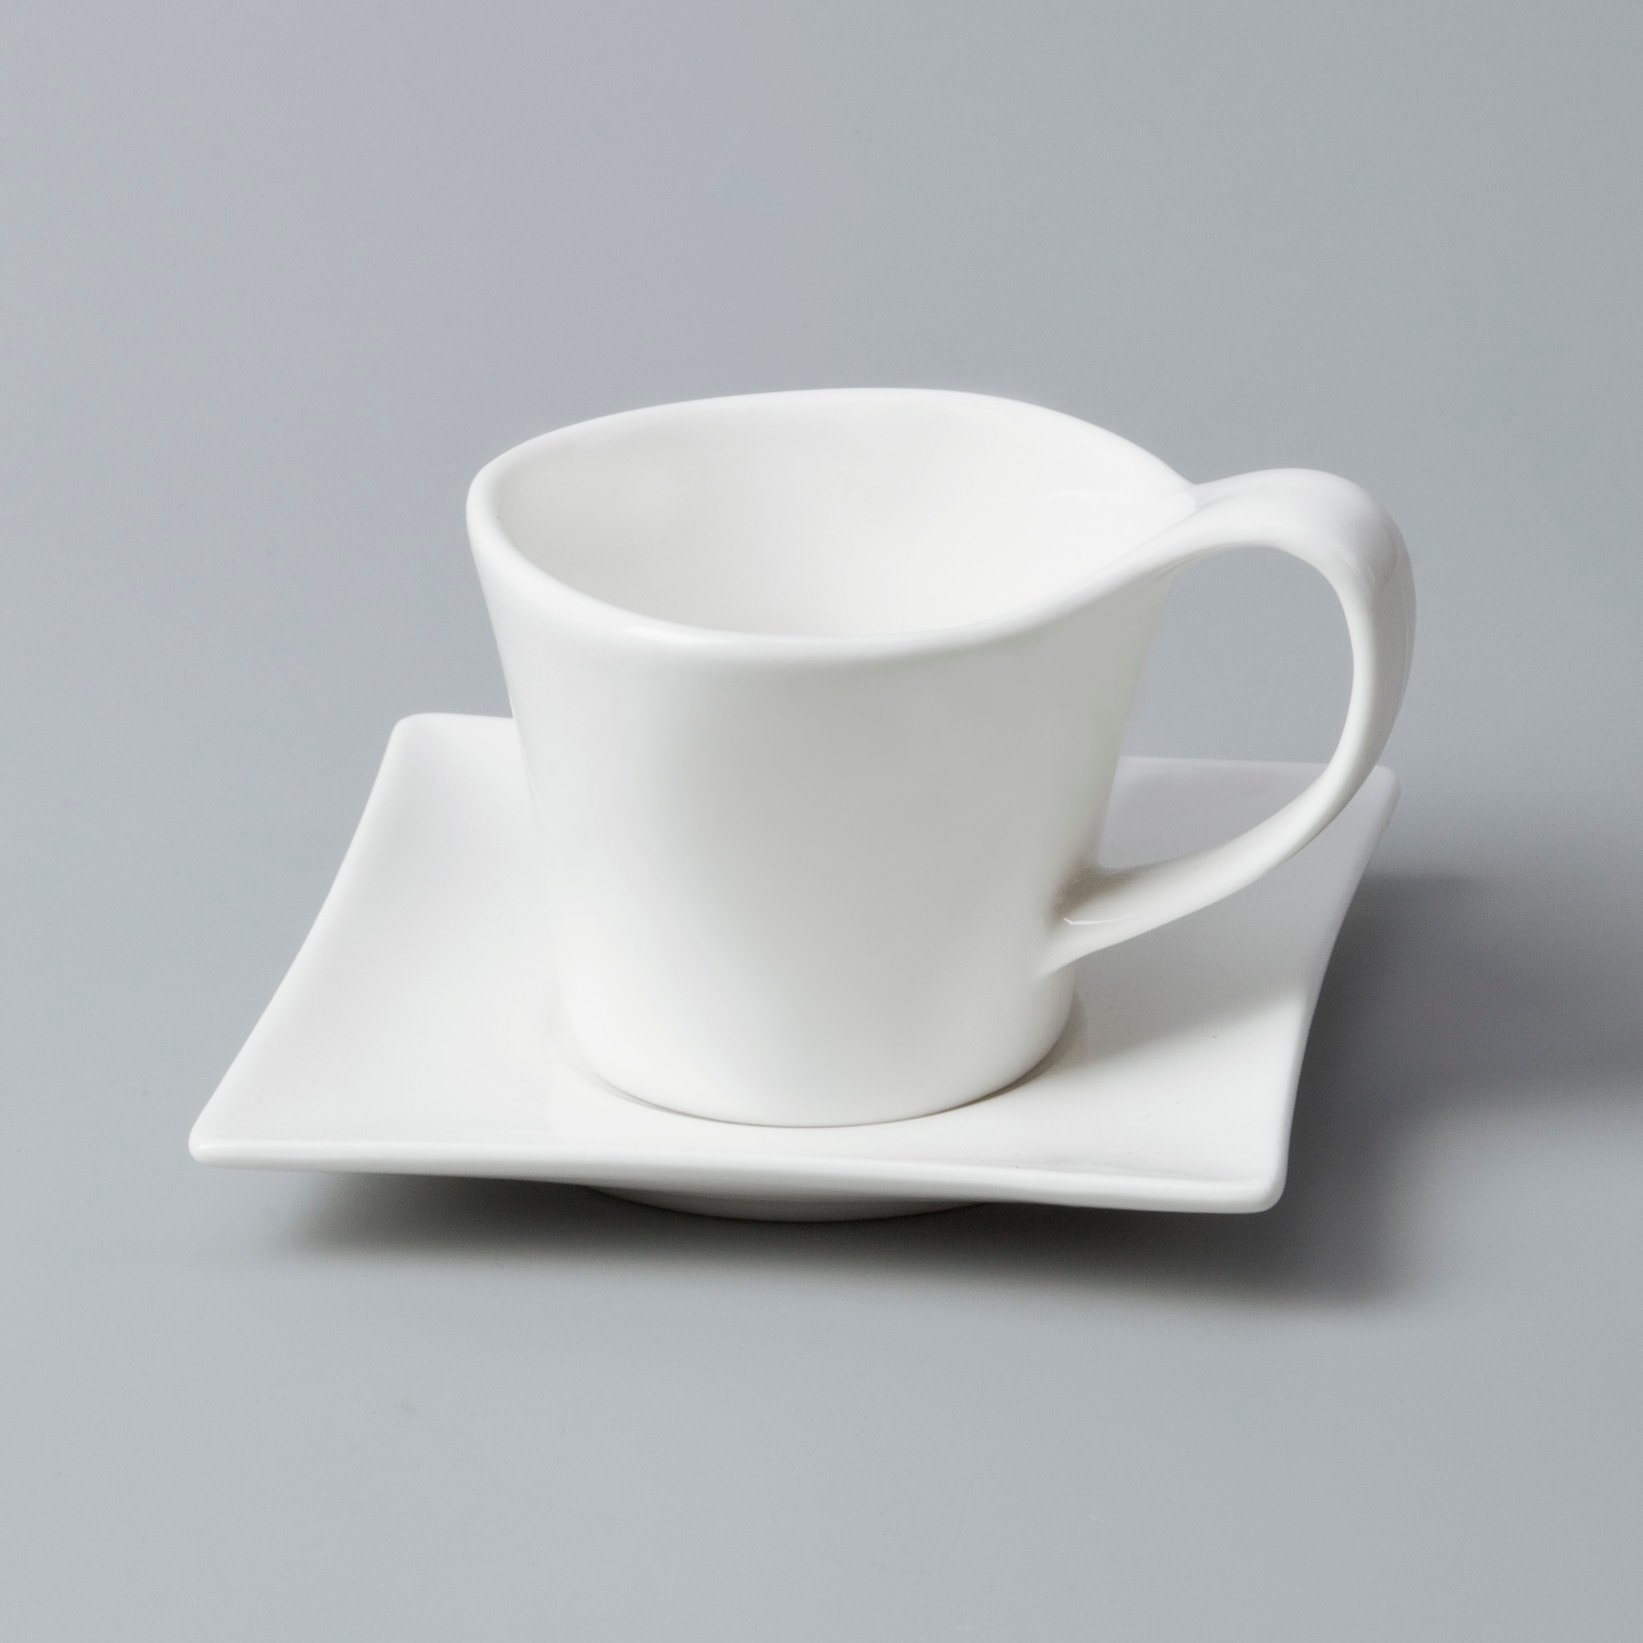 Two Eight Brand quan fashion white porcelain tableware wang supplier